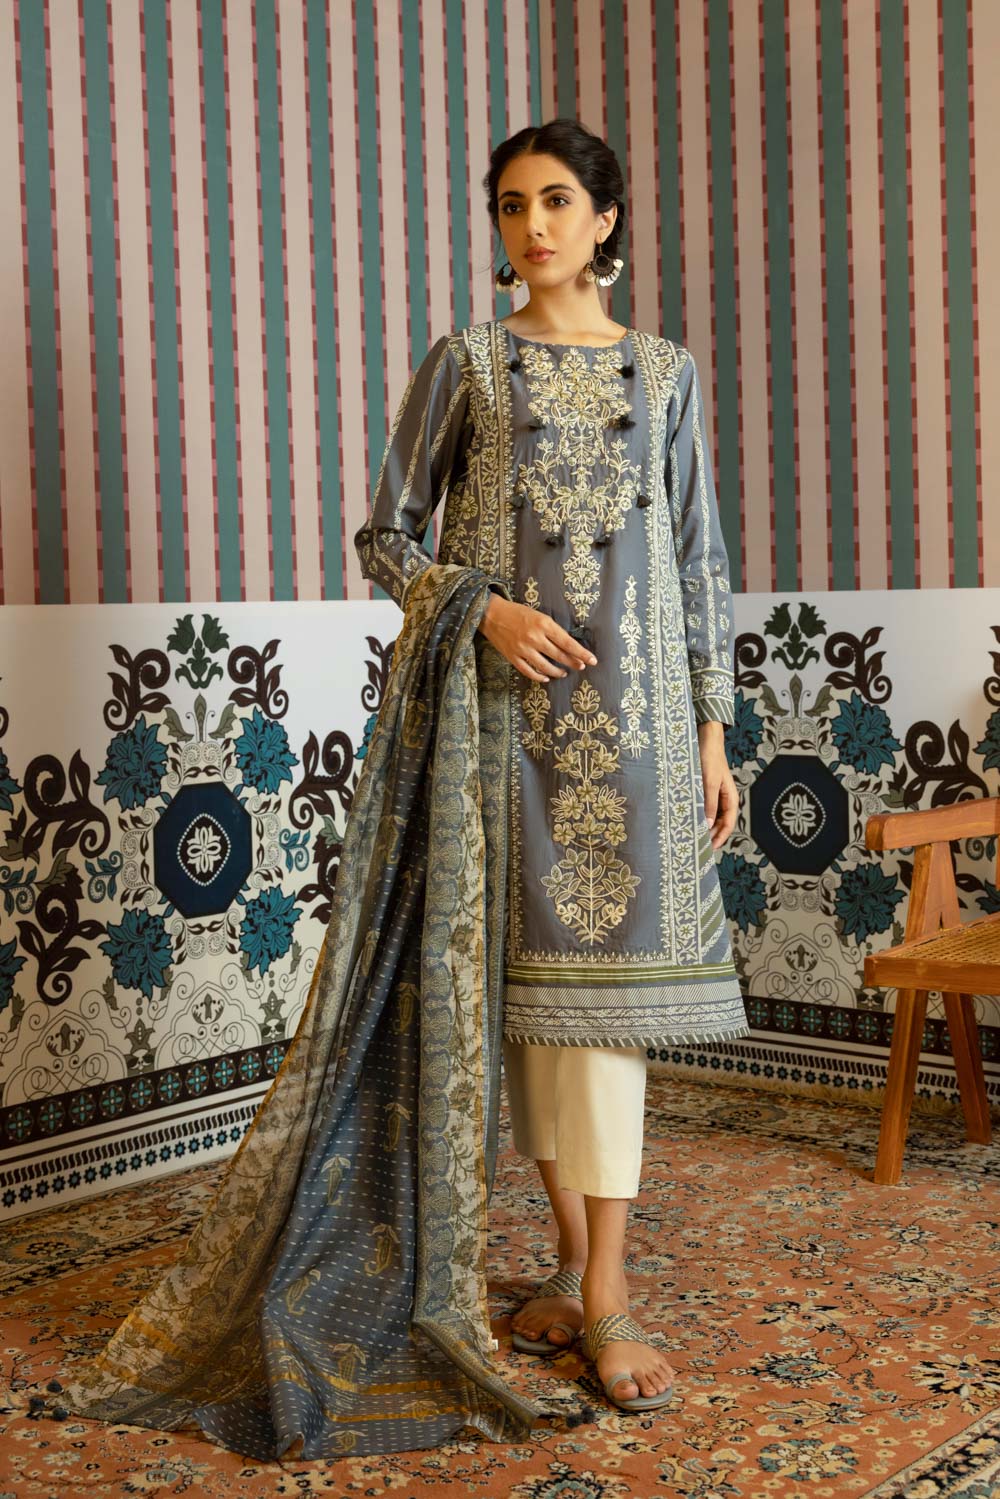 Sapphire Hughette Pakistani Brand Clothes in UK and USA - Pakistani ...